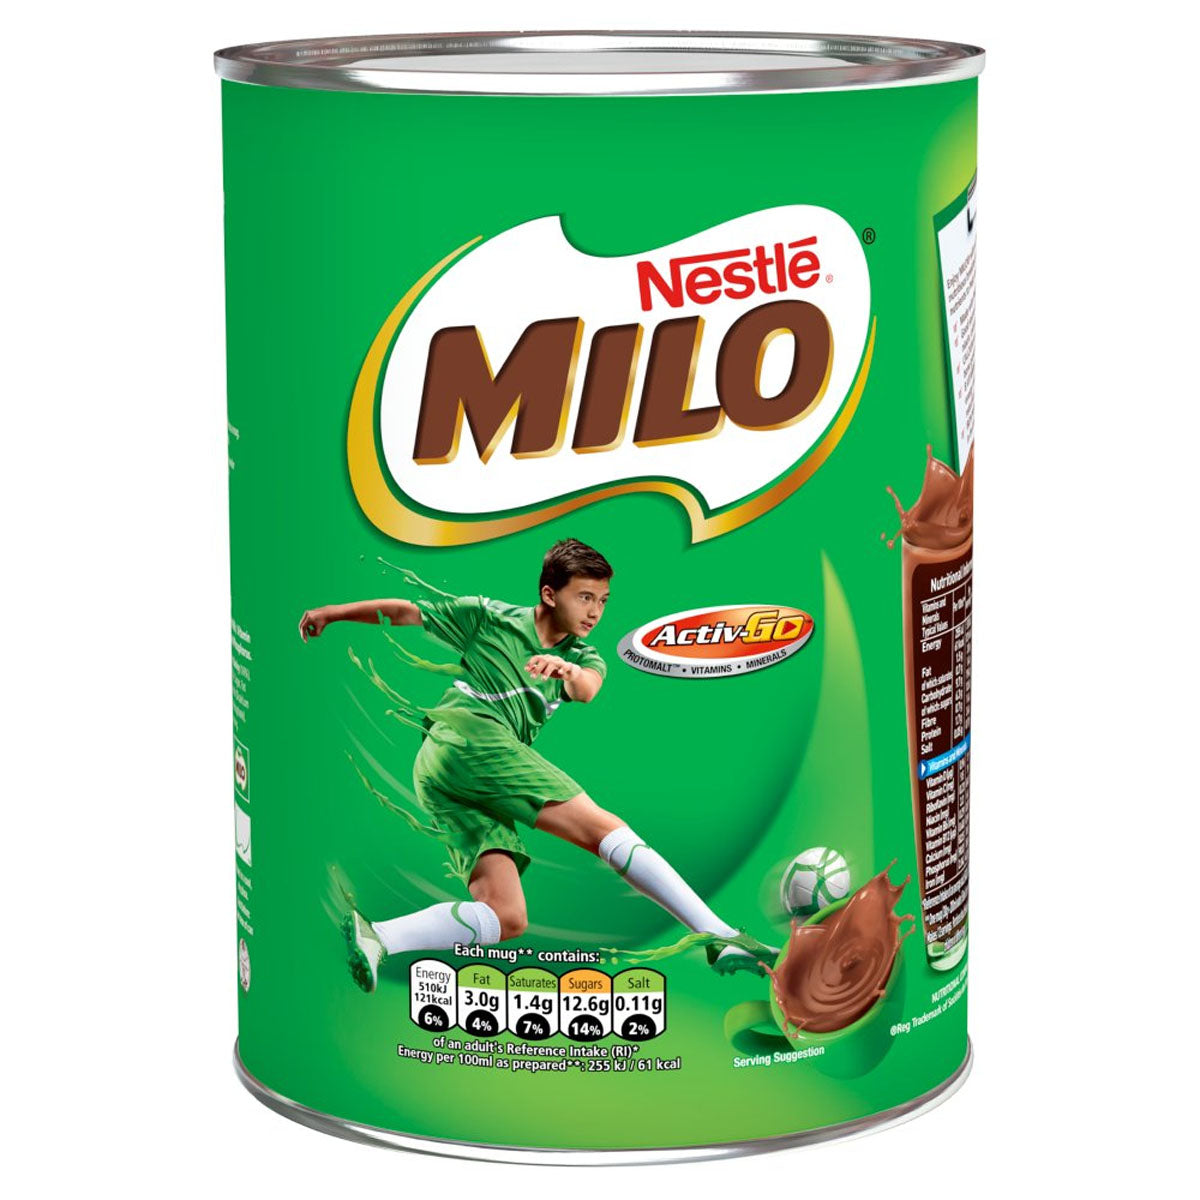 A tin of Nestle - Milo Instant Malt Chocolate Drinking Powder on a white background.